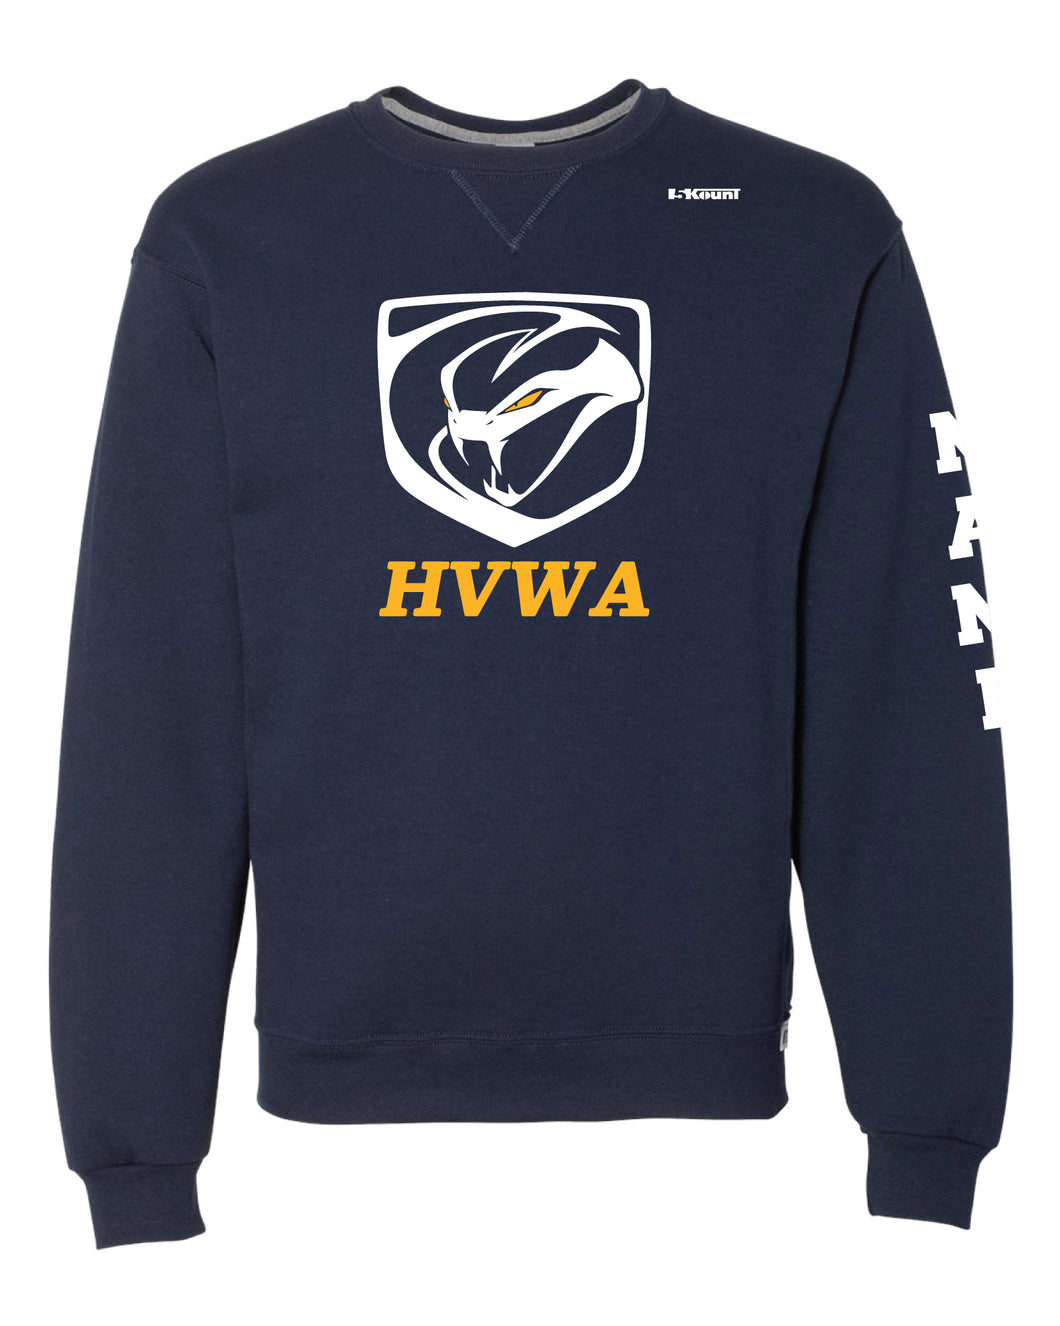 HVWA Russell Athletic Cotton Crewneck Sweatshirt - Navy - 5KounT2018